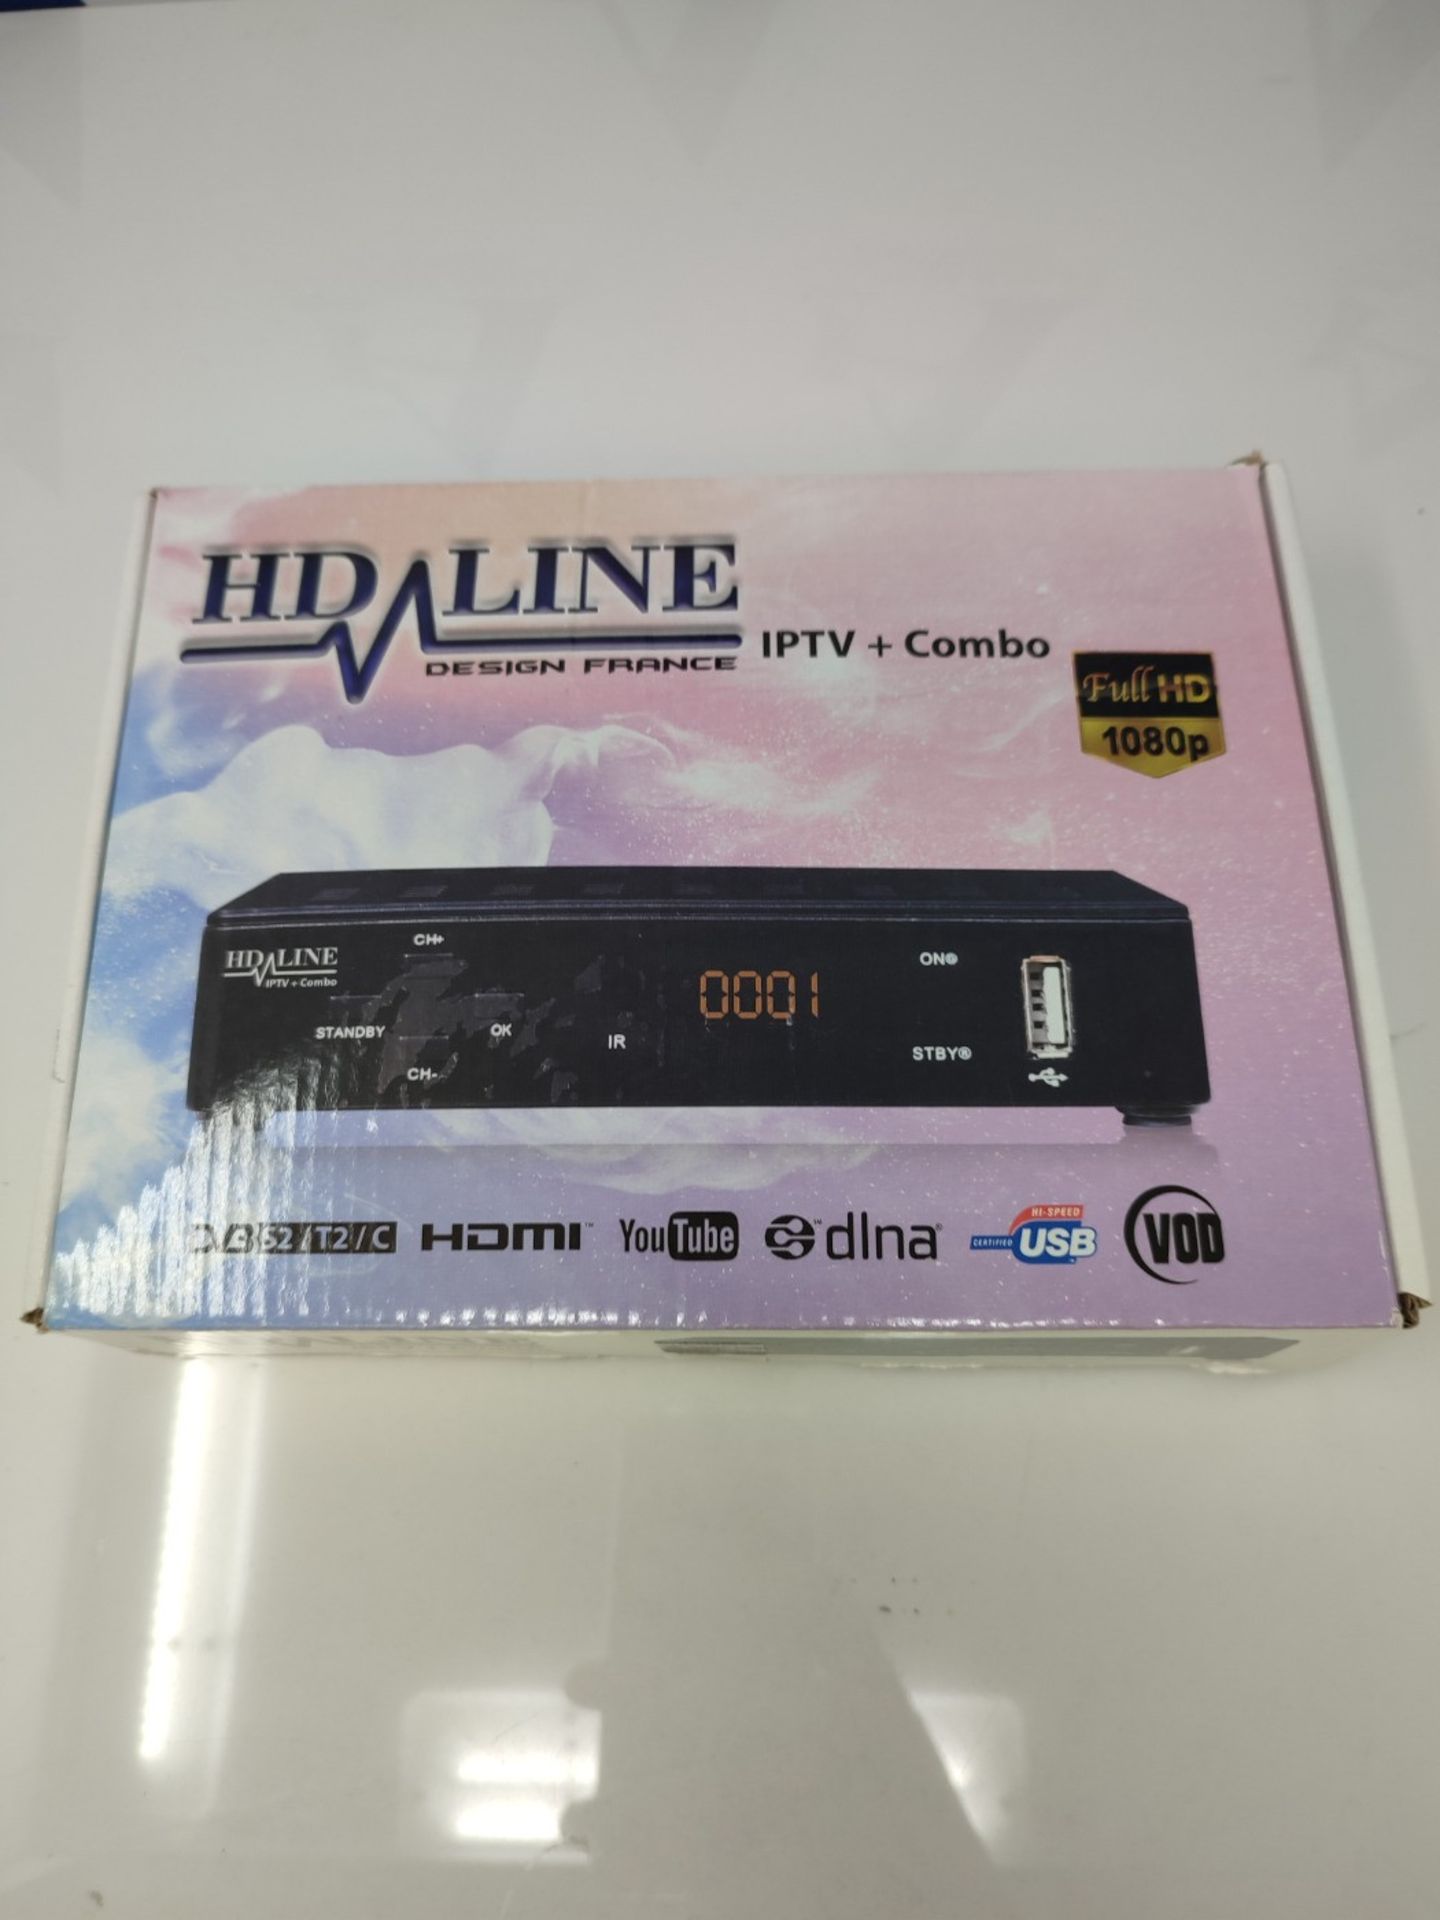 hd-line Tivusat s2 satellite satellite receiver - digital IPTV box and card (HDTV, WiF - Image 2 of 3